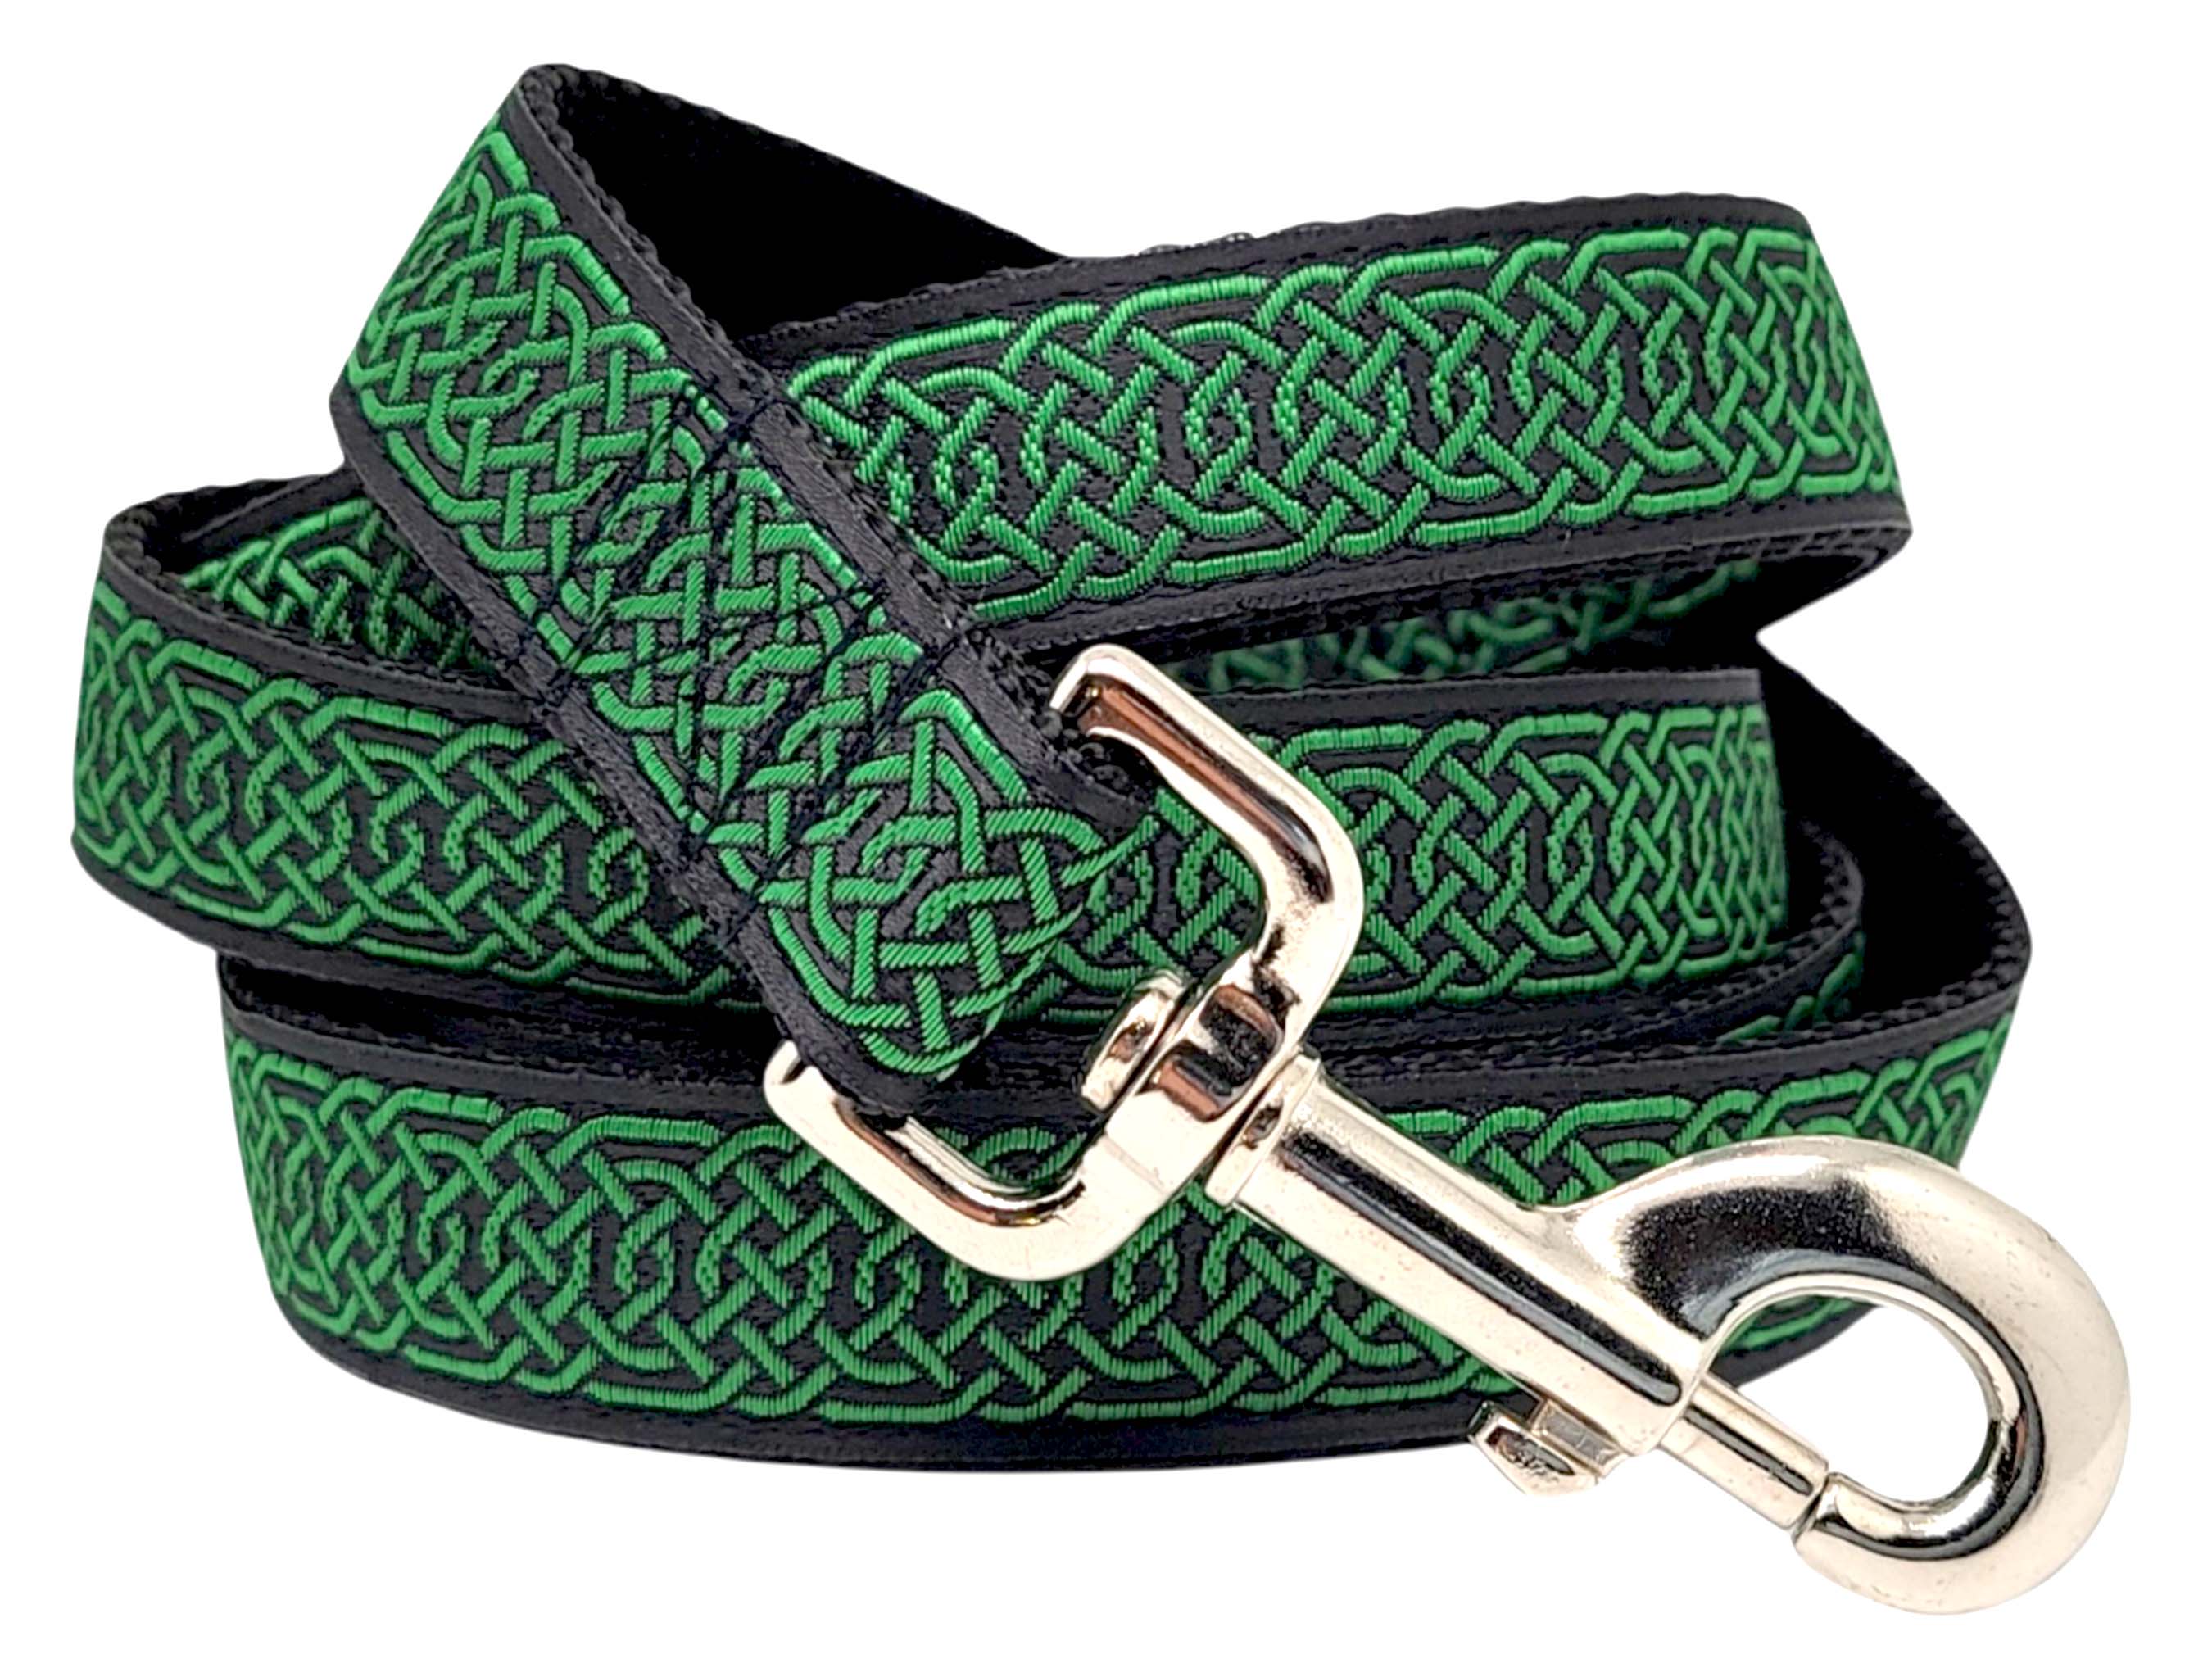 The Hound Haberdashery Wexford Celtic Braid Jacquard Dog Leash in Green & Black